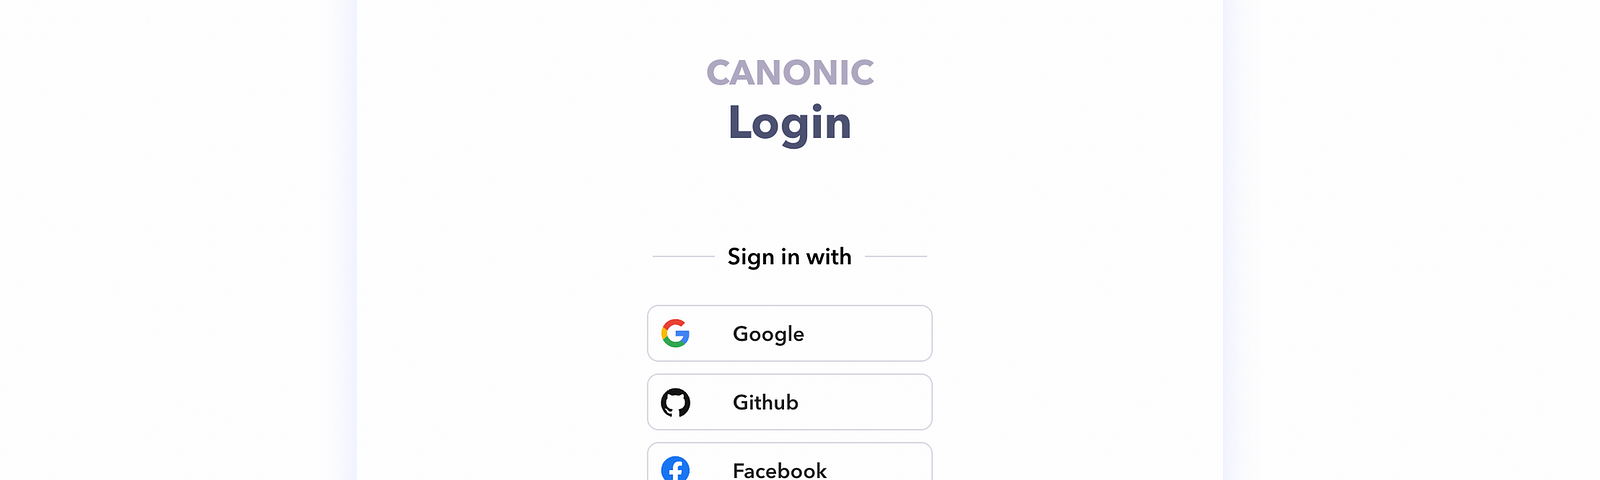 canonic login screen